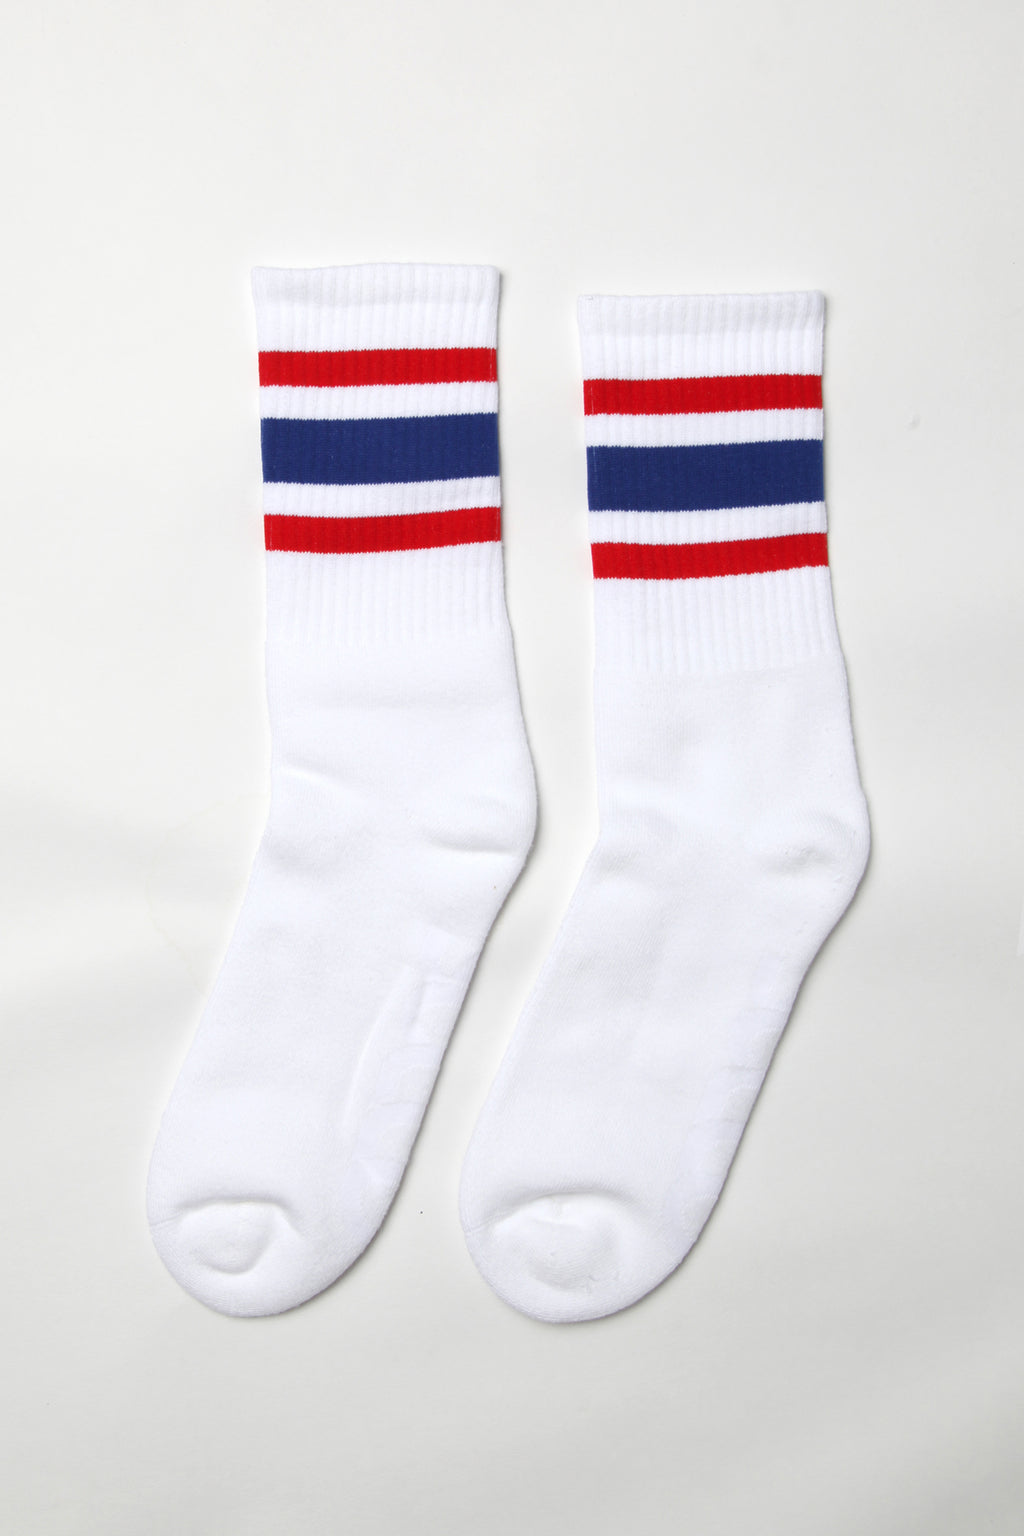 Socco - Striped Crew Socks - Red/Blue/White